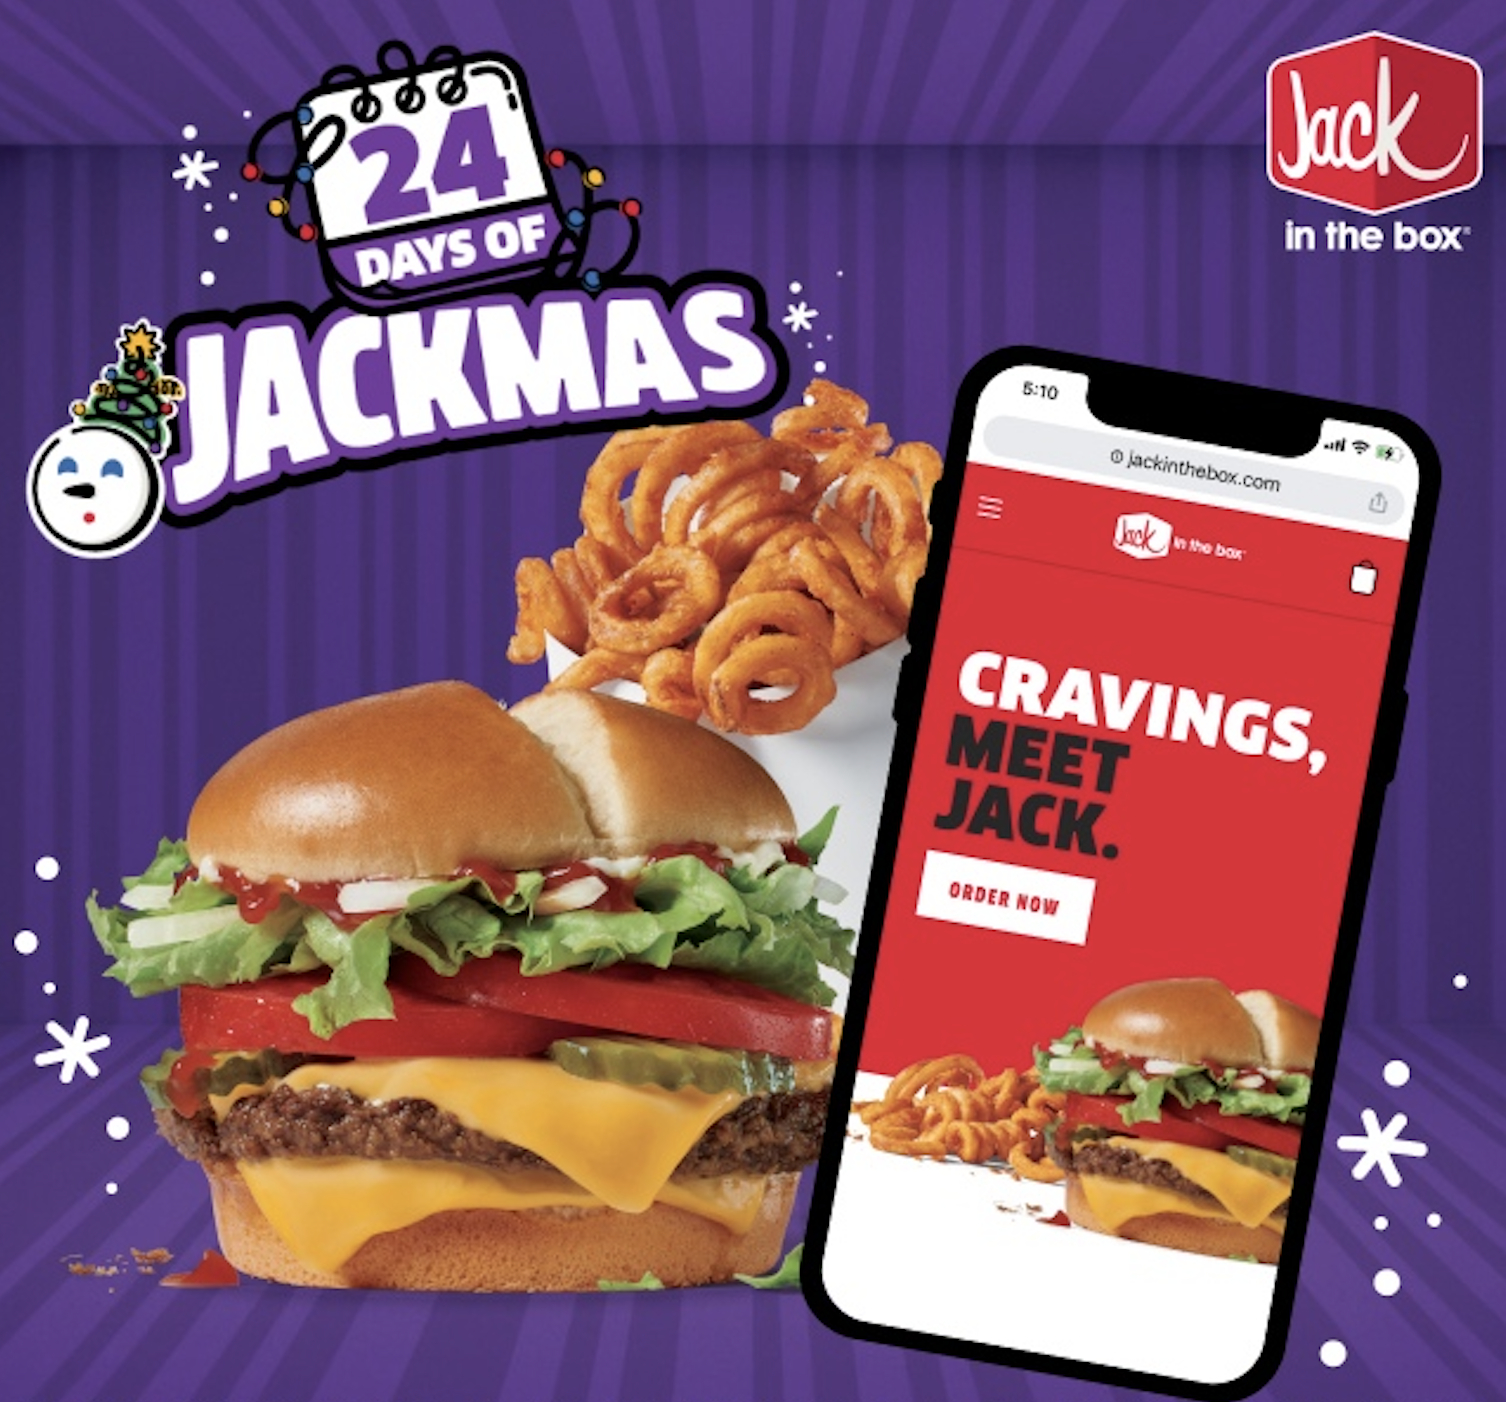 Jack In The Box 24 Days Of Jackmas Deals Dec 1 - Dec 24